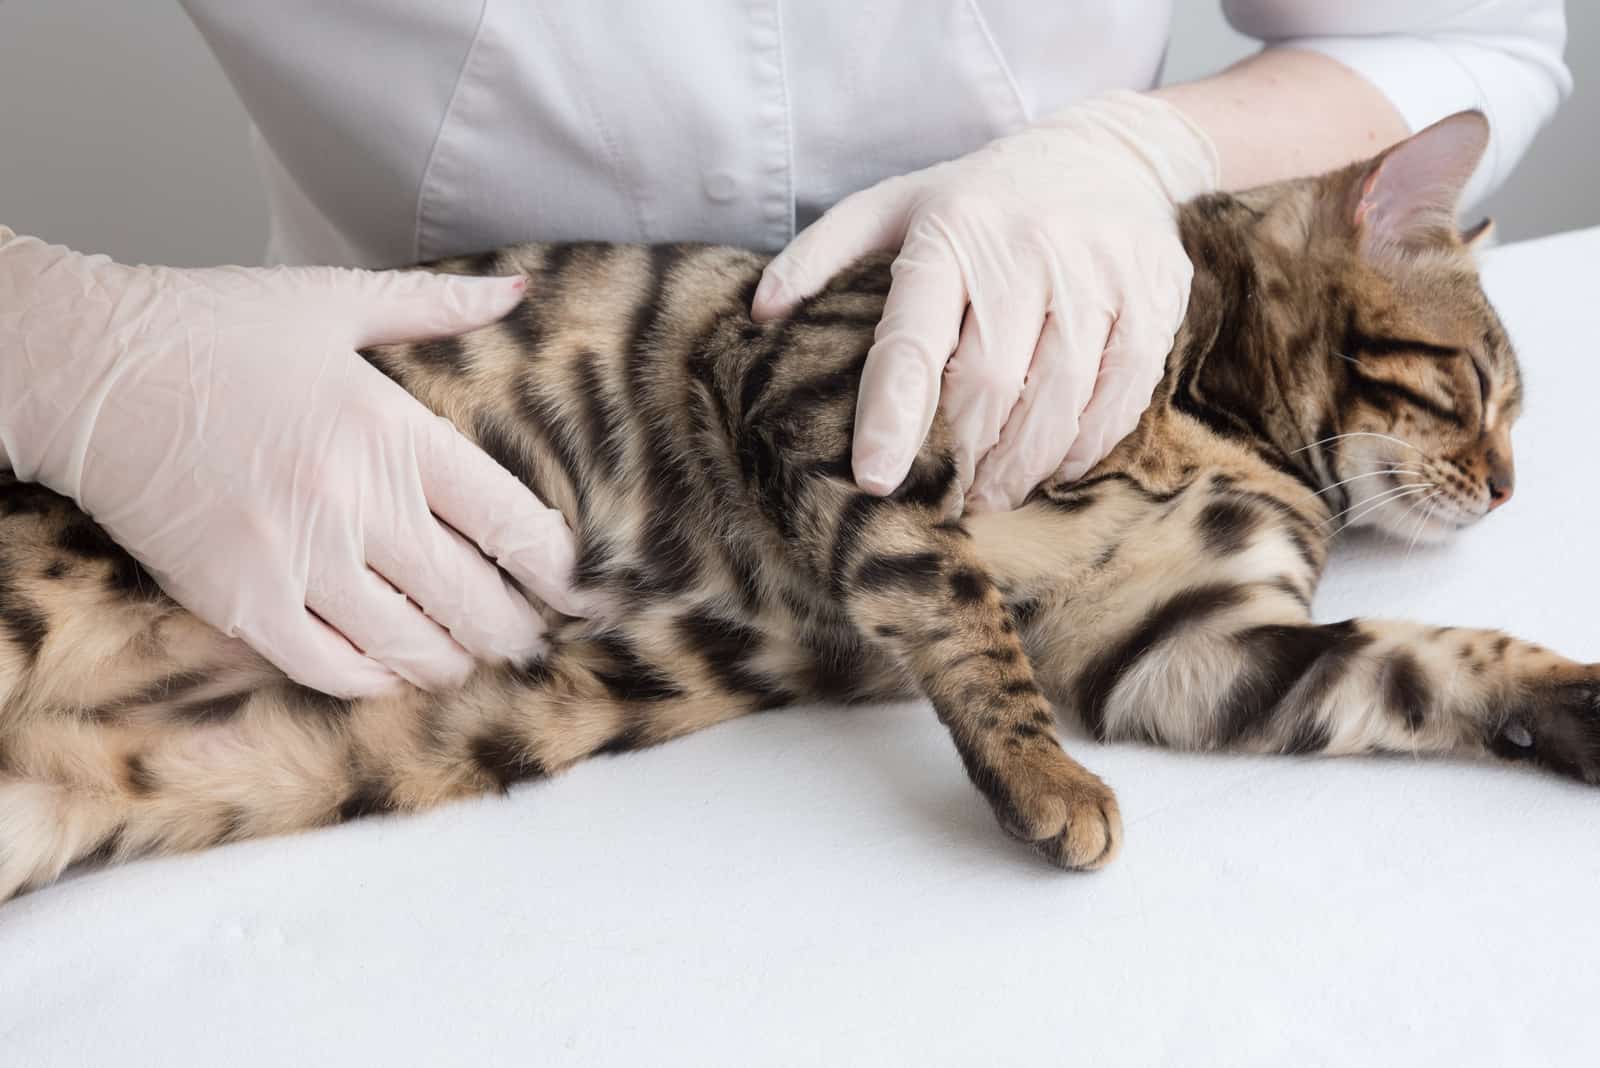 the vet examines the cat